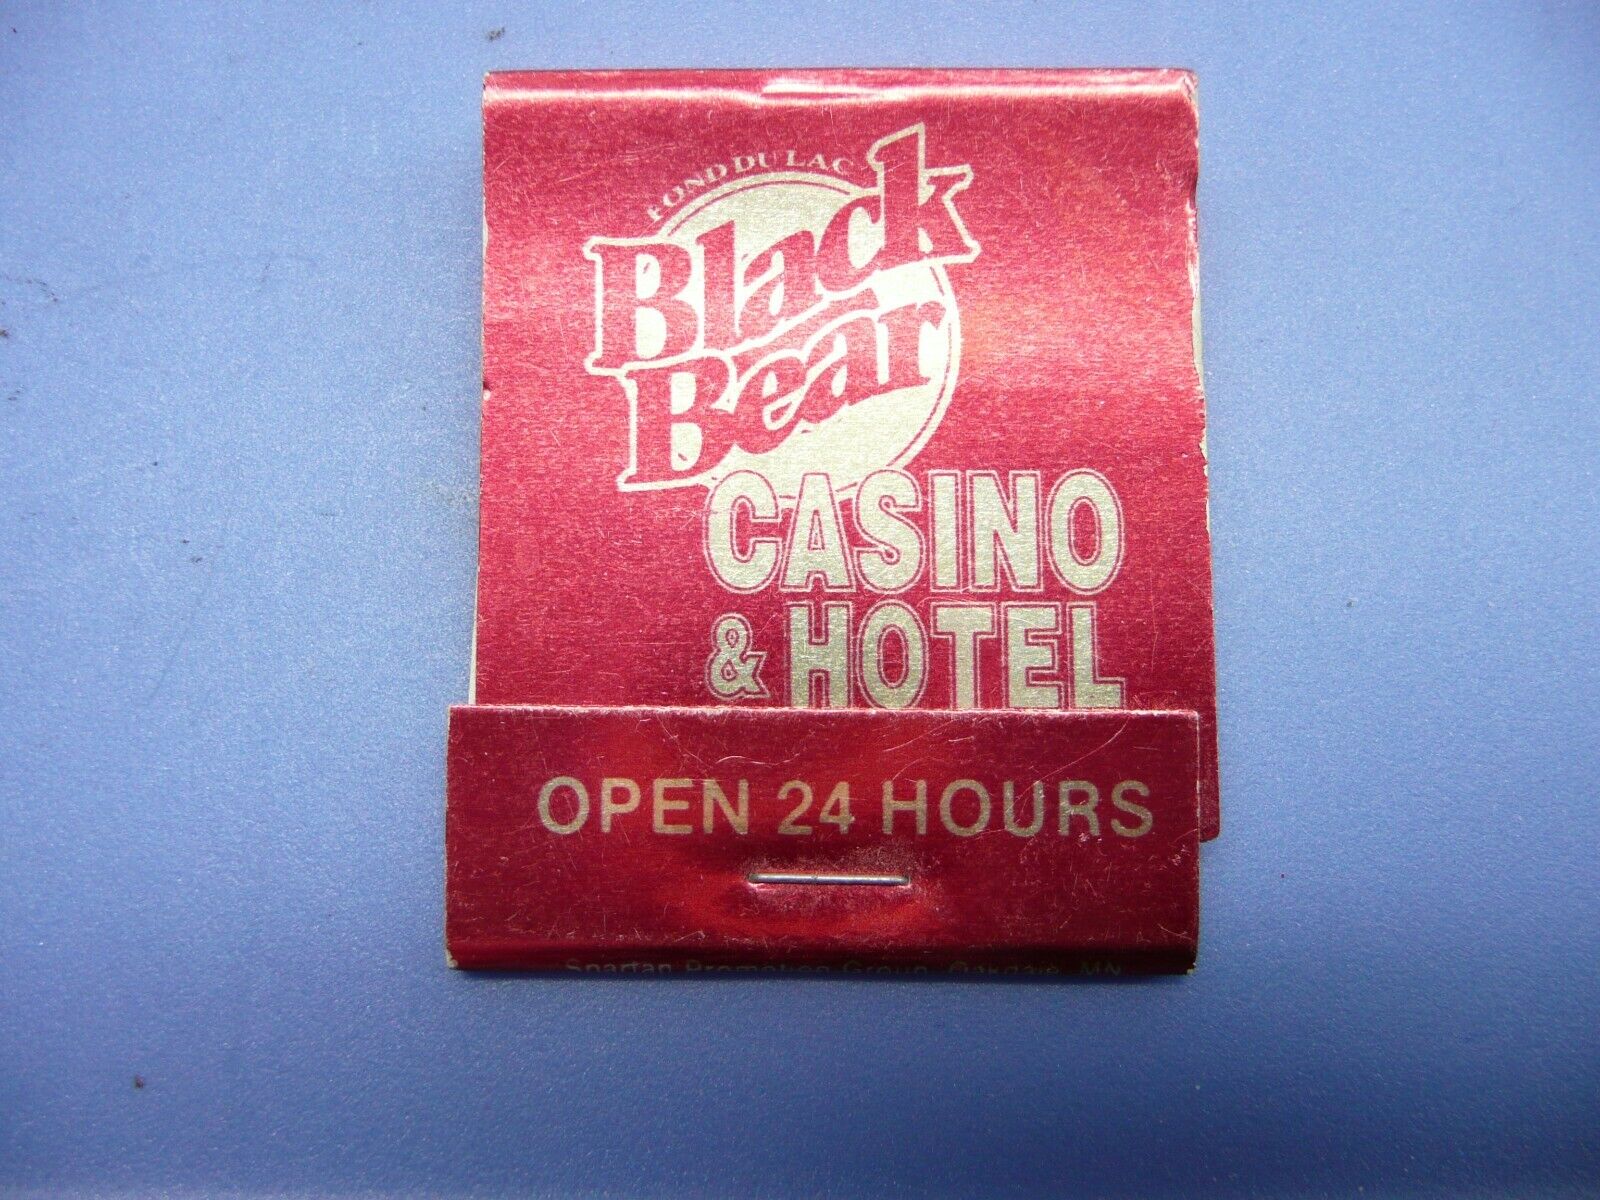 Black Bear Casino & Hotel, Vintage Matchbook, Red Cover (h140)